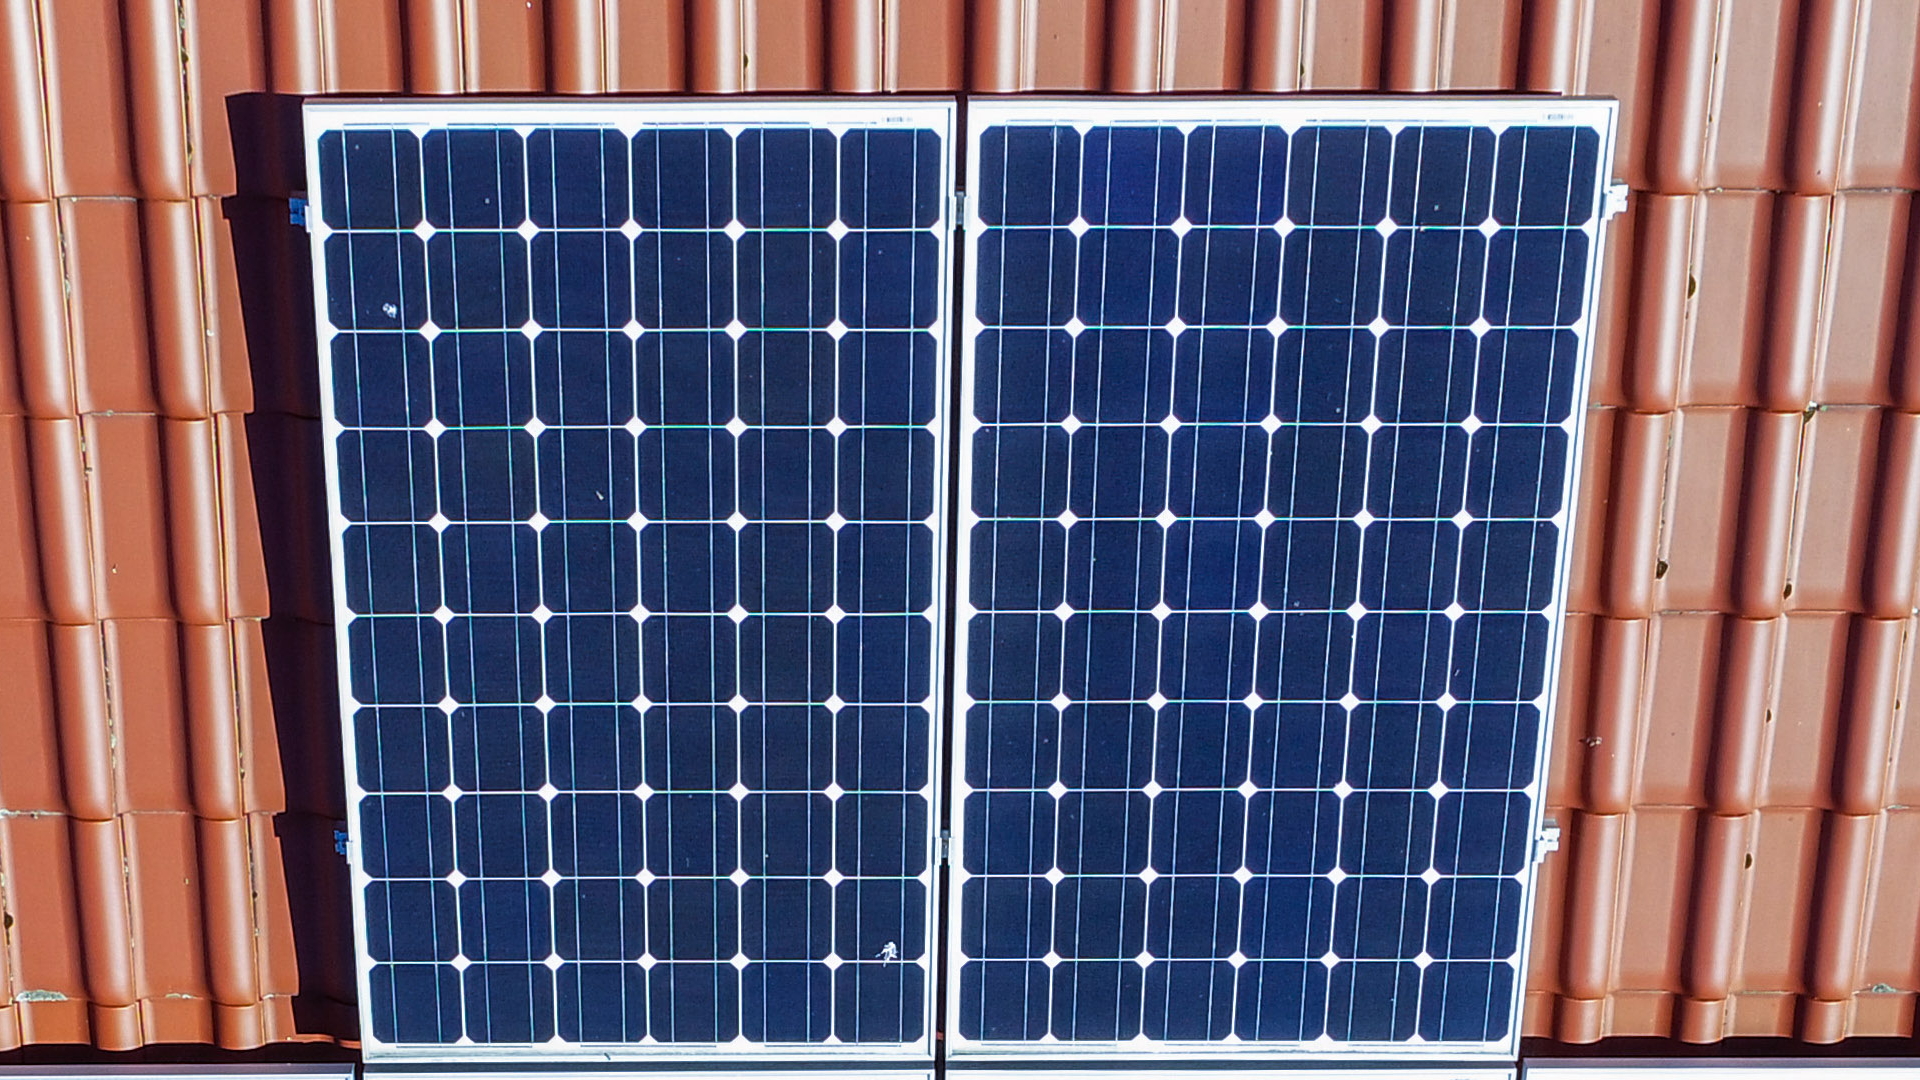 Solarpaneel auf Hausdach | dpa